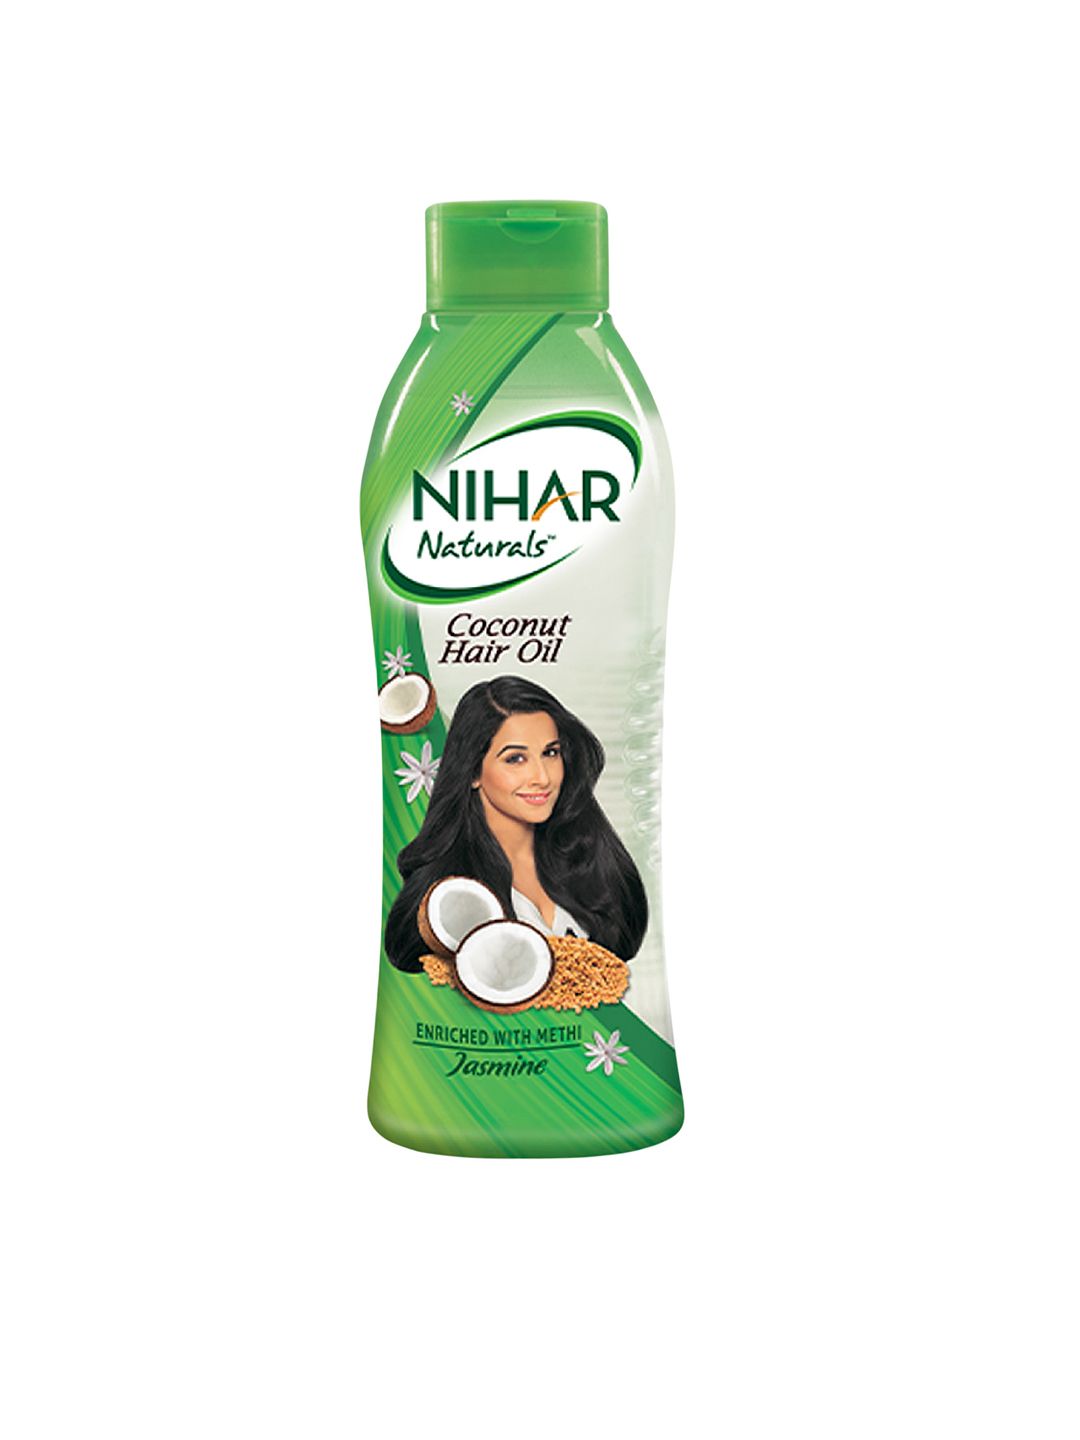 Nihar Naturals Coconut Hair Oil with Methi & Jasmine - 400 ml Price in India